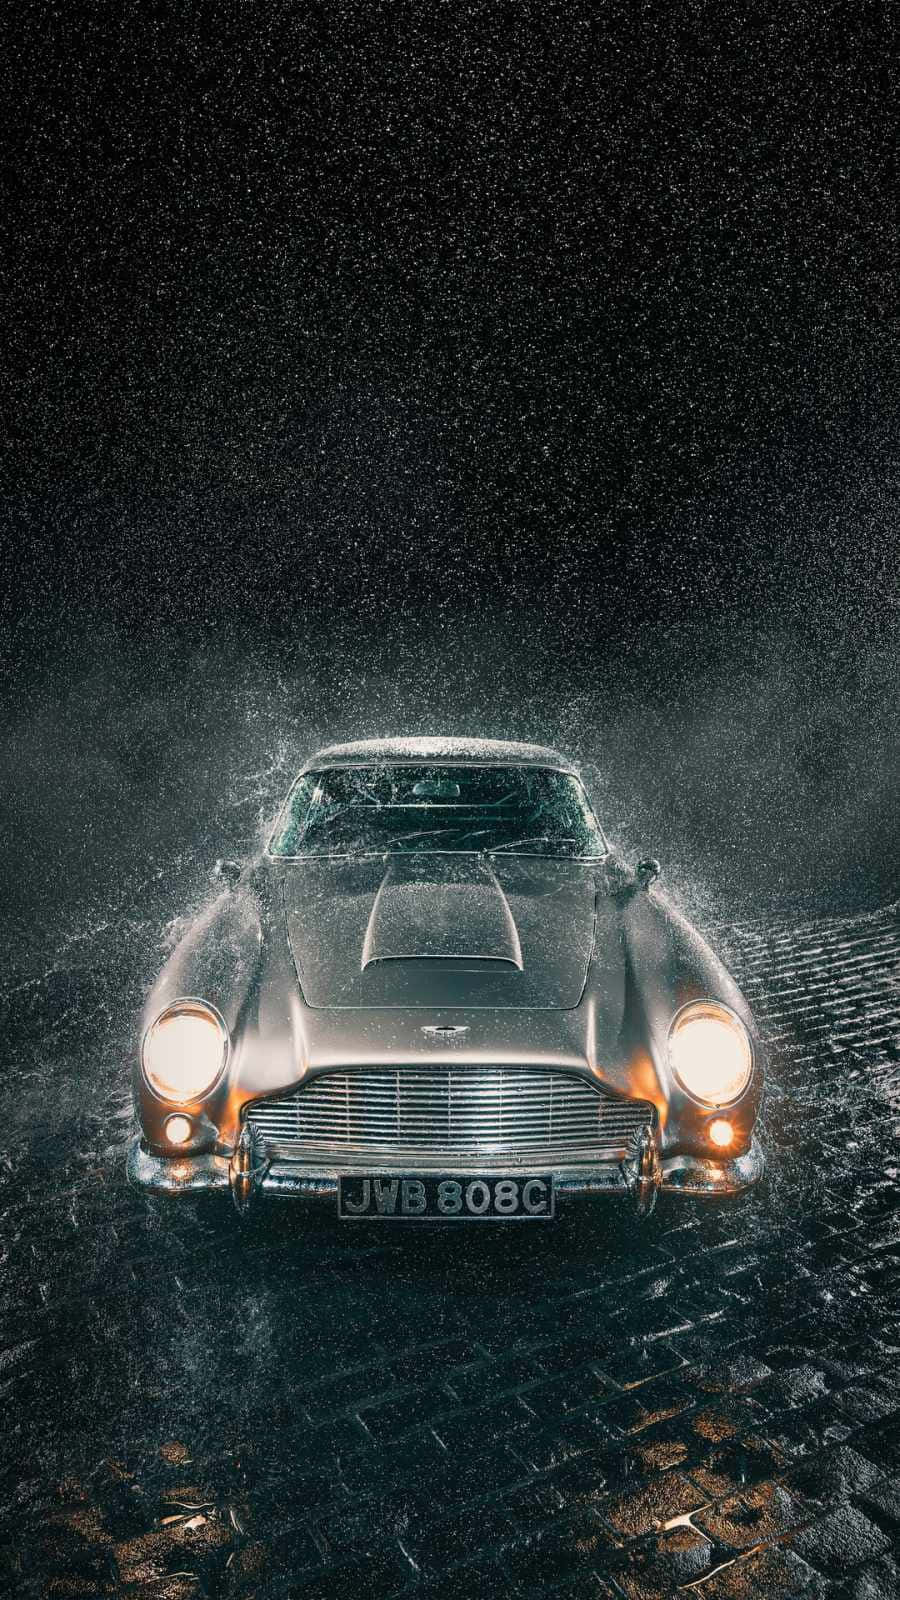 Enjoy the ride of luxury with Aston Martin